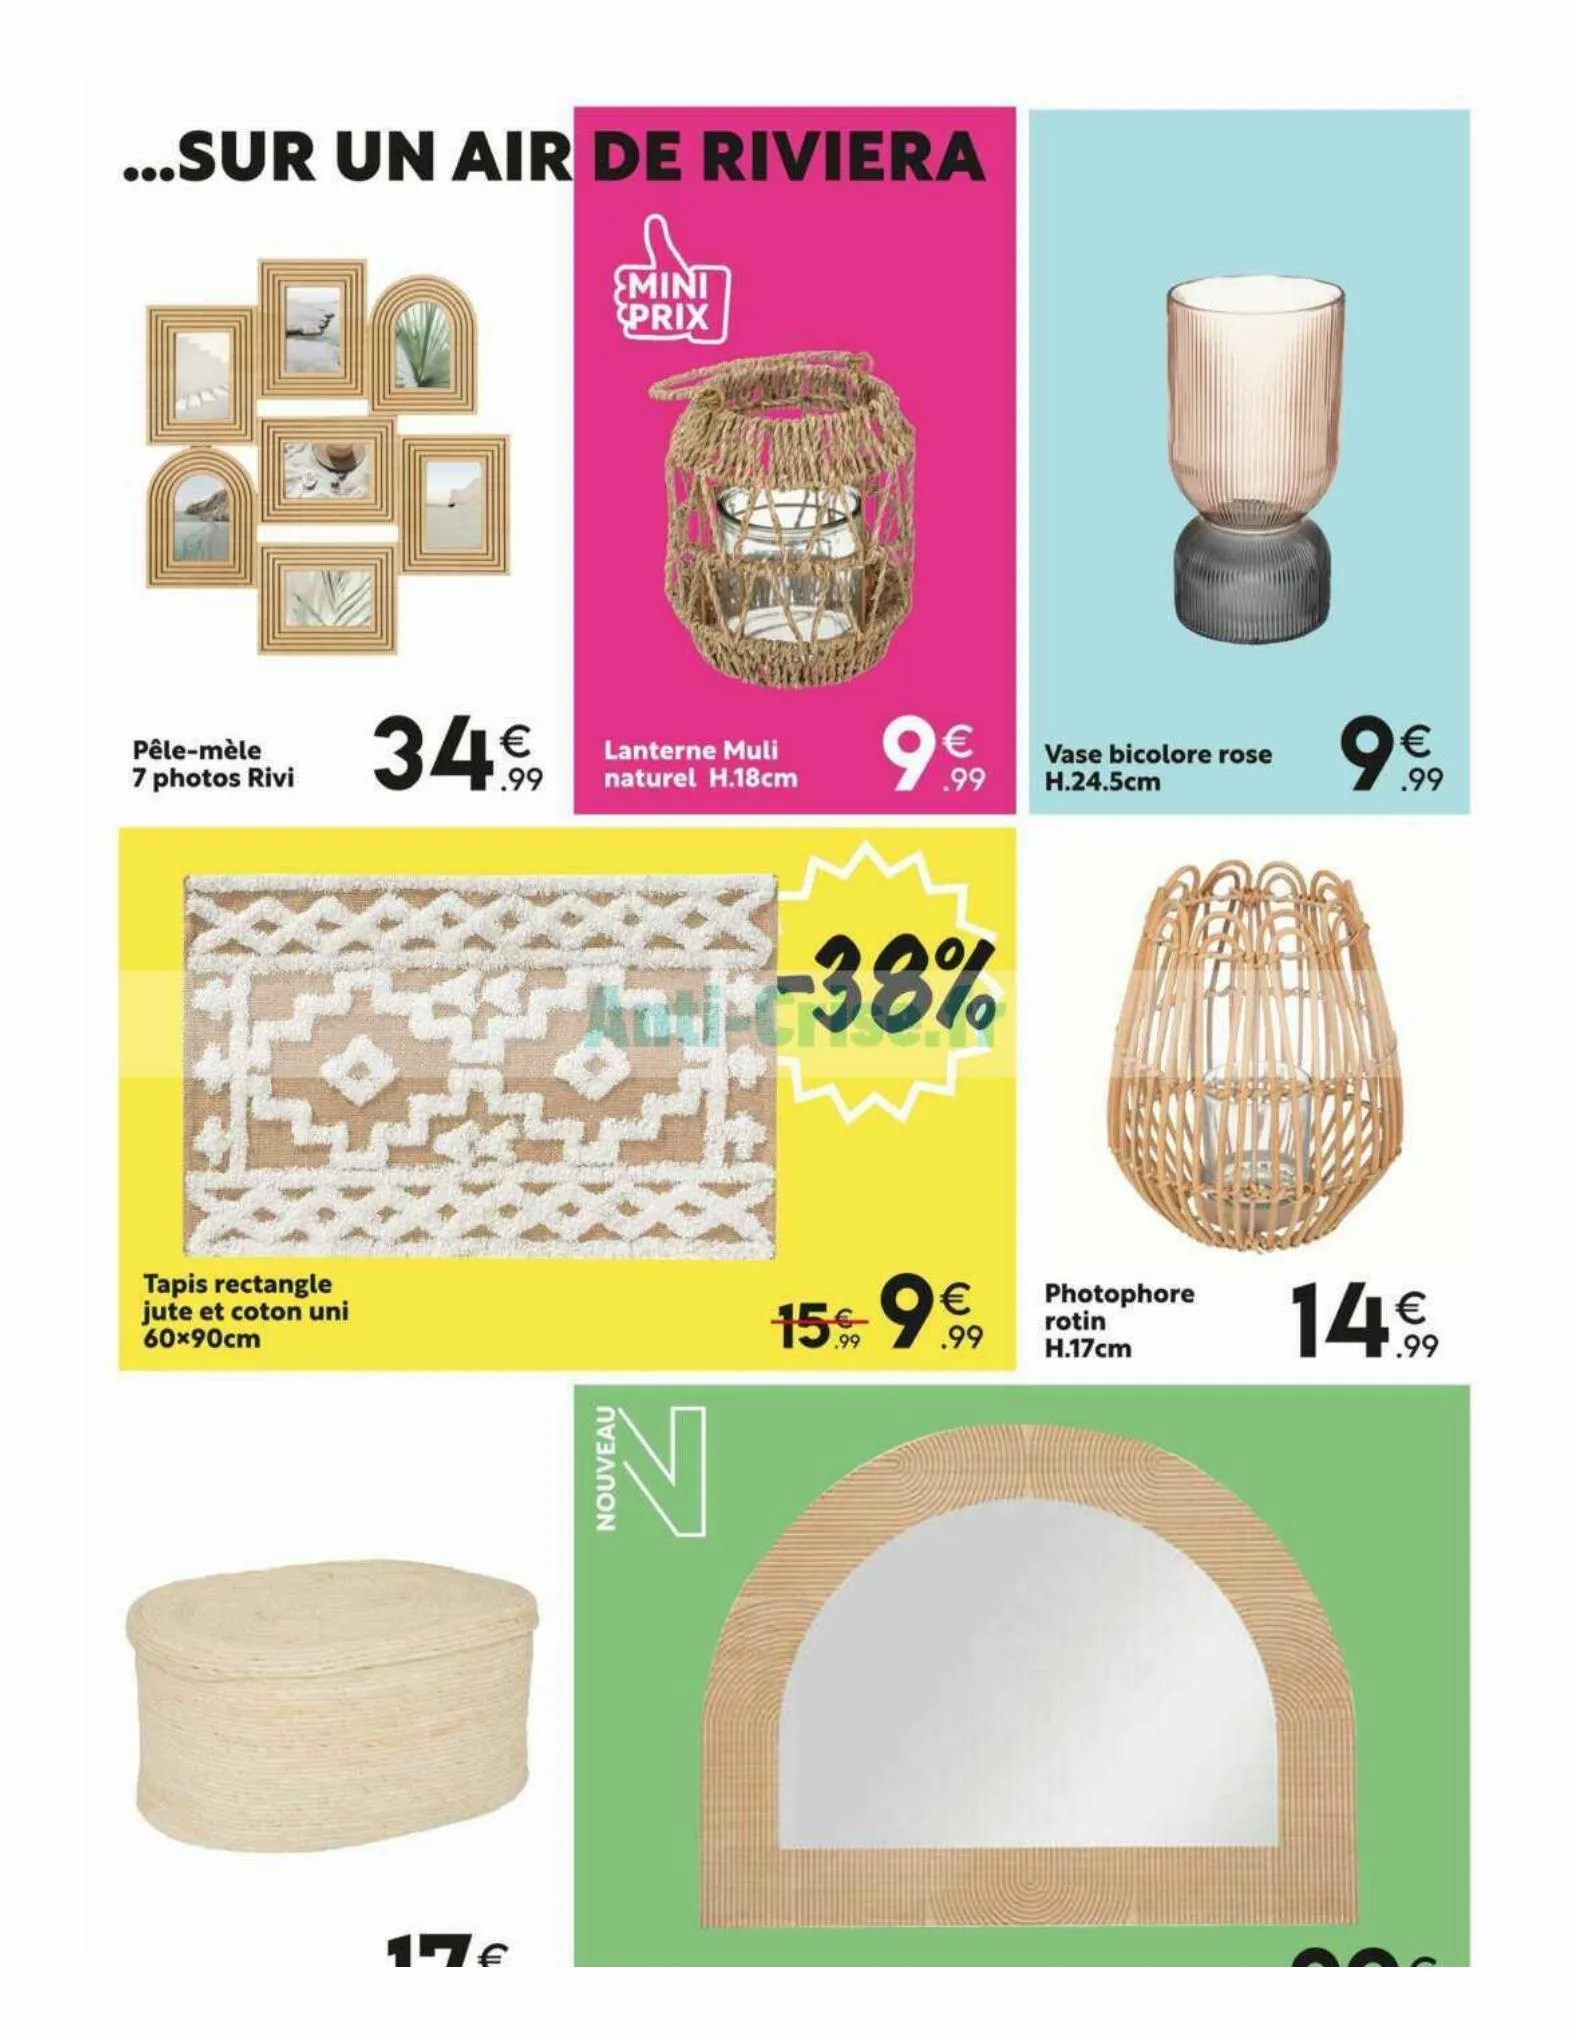 Catalogue Maxi Bazar Offres, page 00011